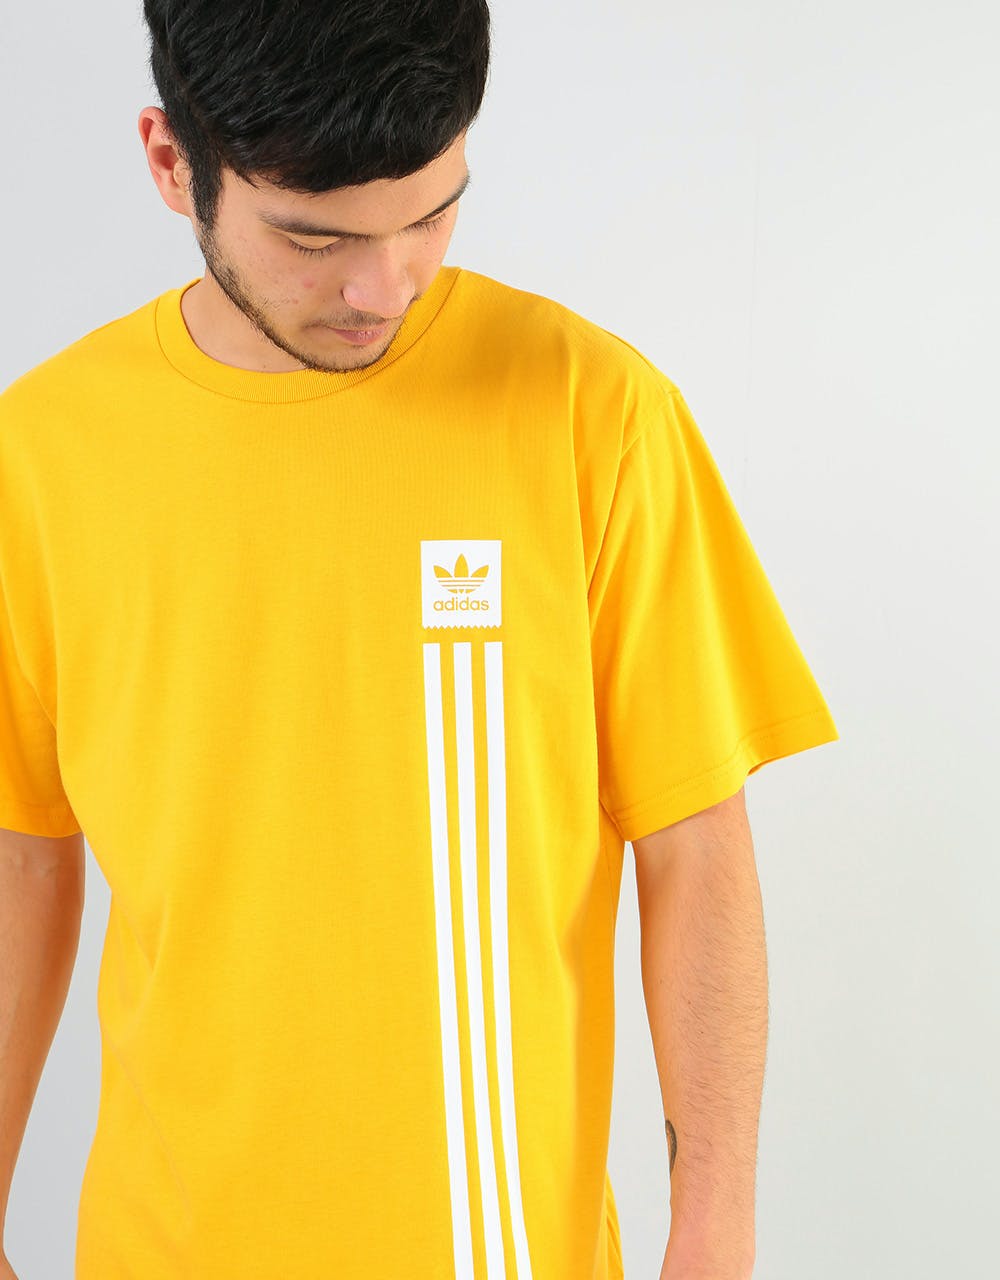 Adidas BB Pillar T-Shirt - Active Gold/White